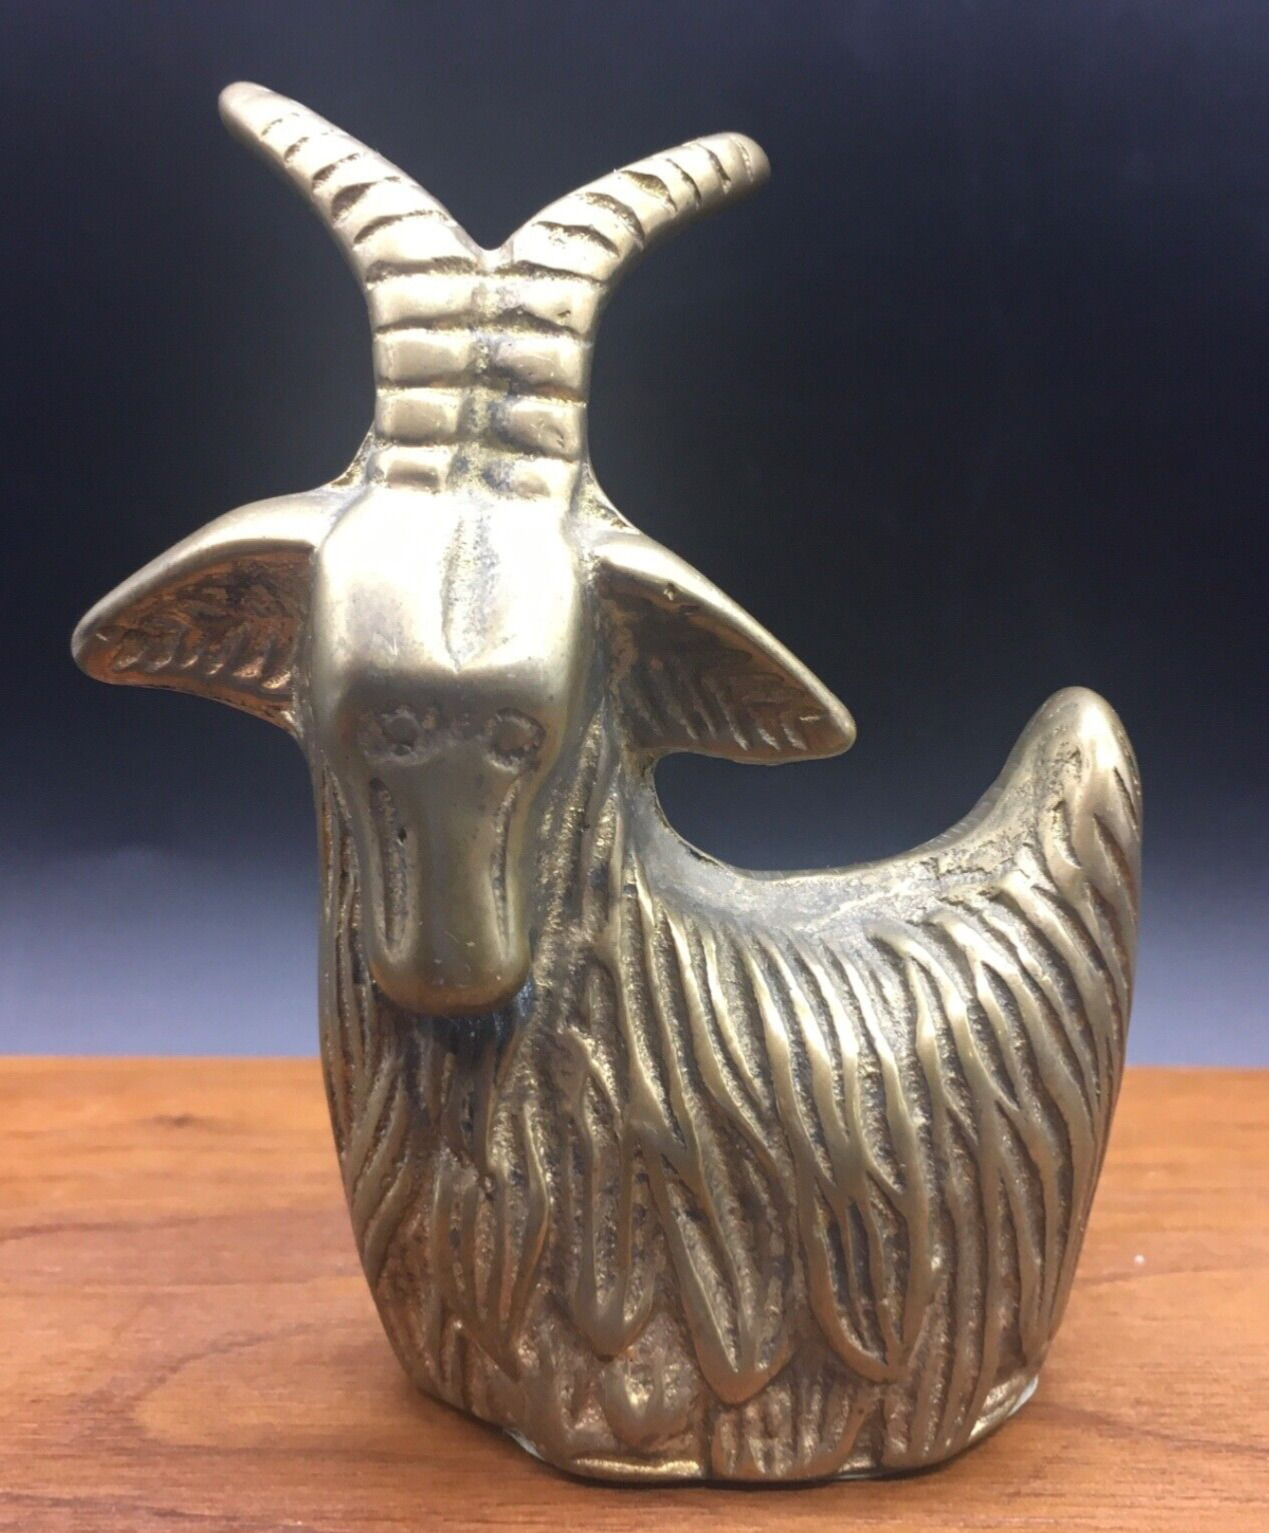 Brass vintage sitting goat figurine with long horns 3.5” X 3” green felt bottom